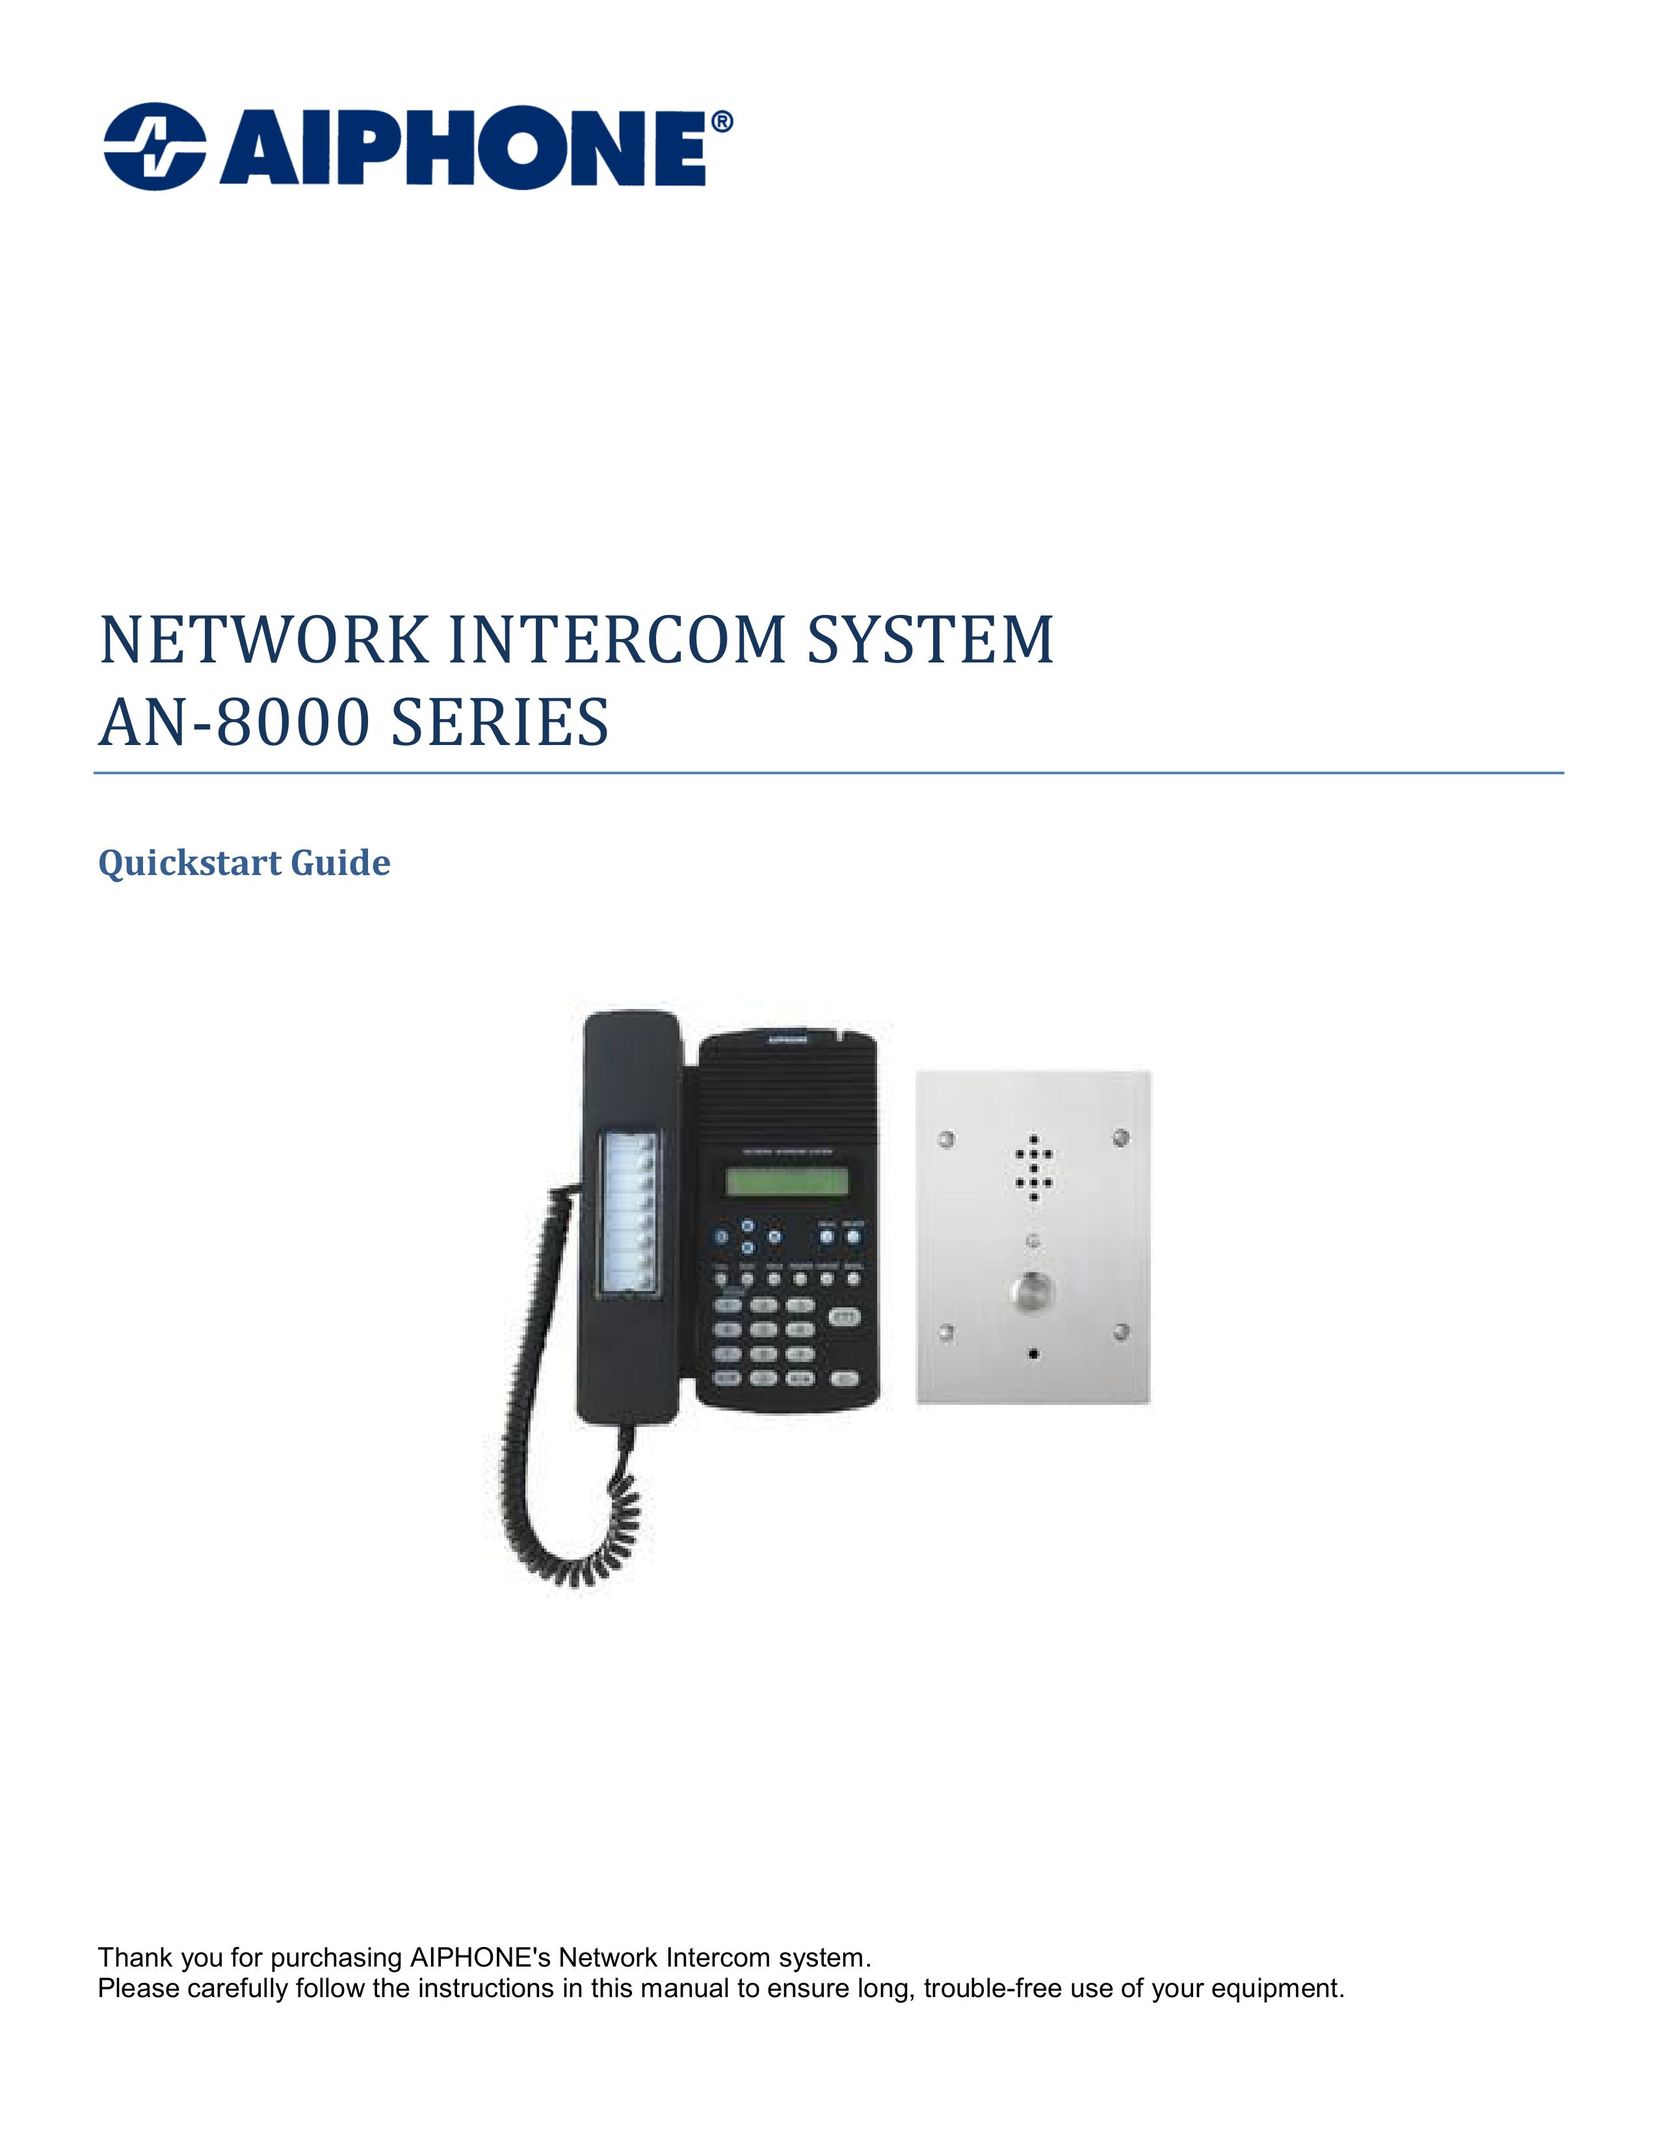 Aiphone AN-8000 Intercom System User Manual